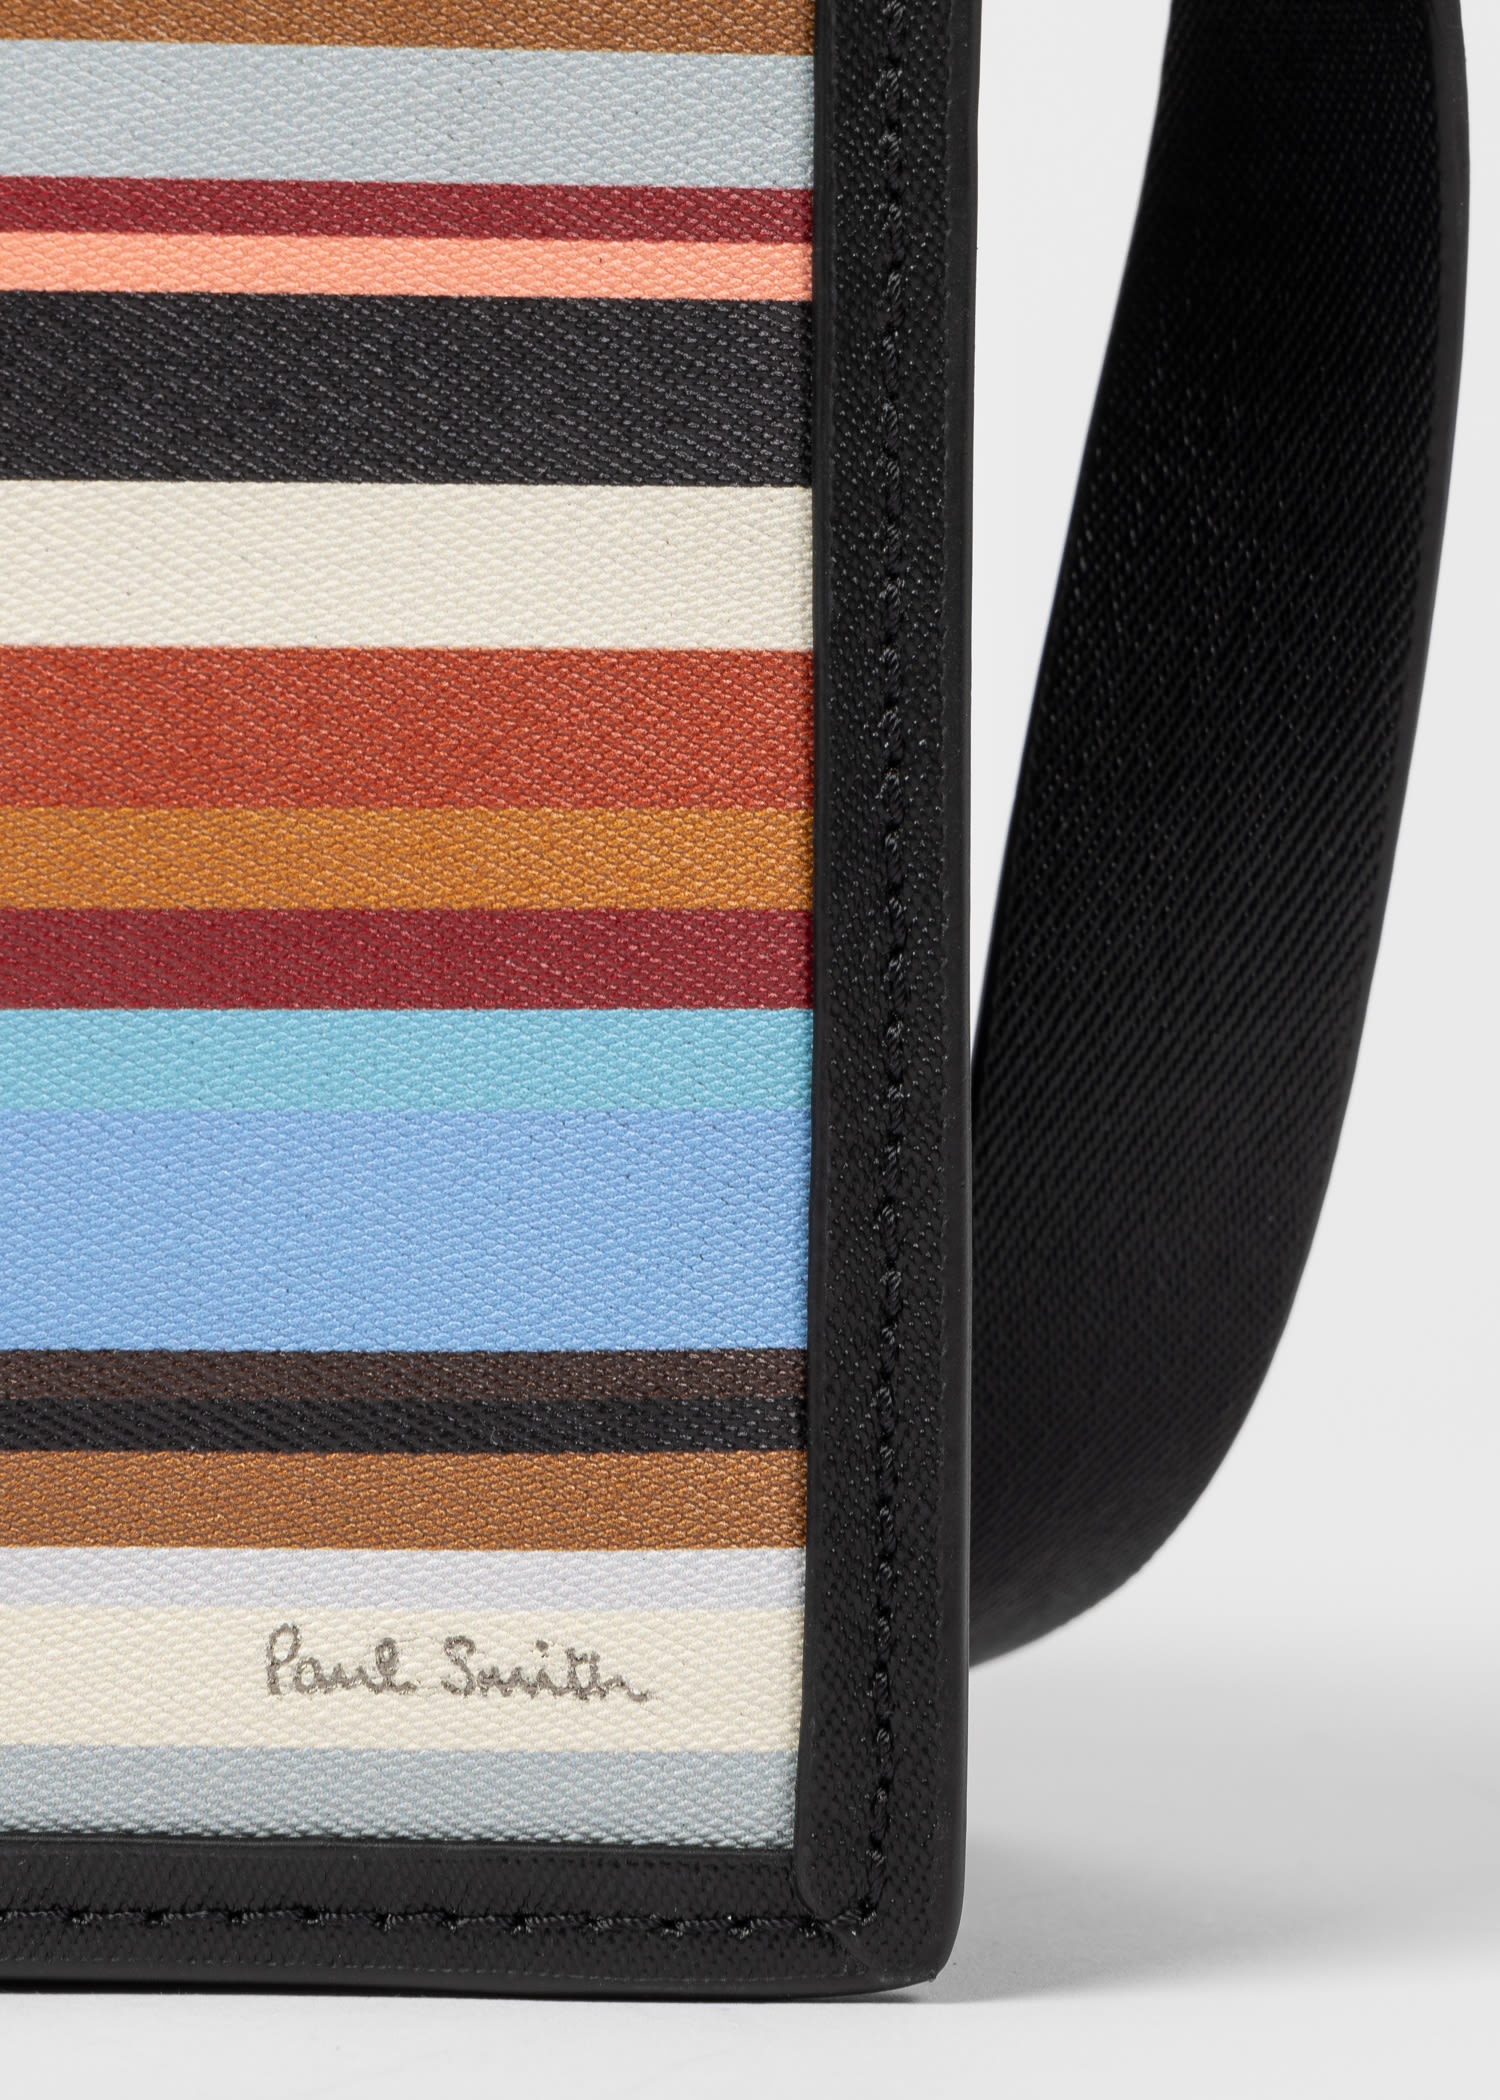 Paul Smith Shoulder Bags for Men - Shop Now on FARFETCH